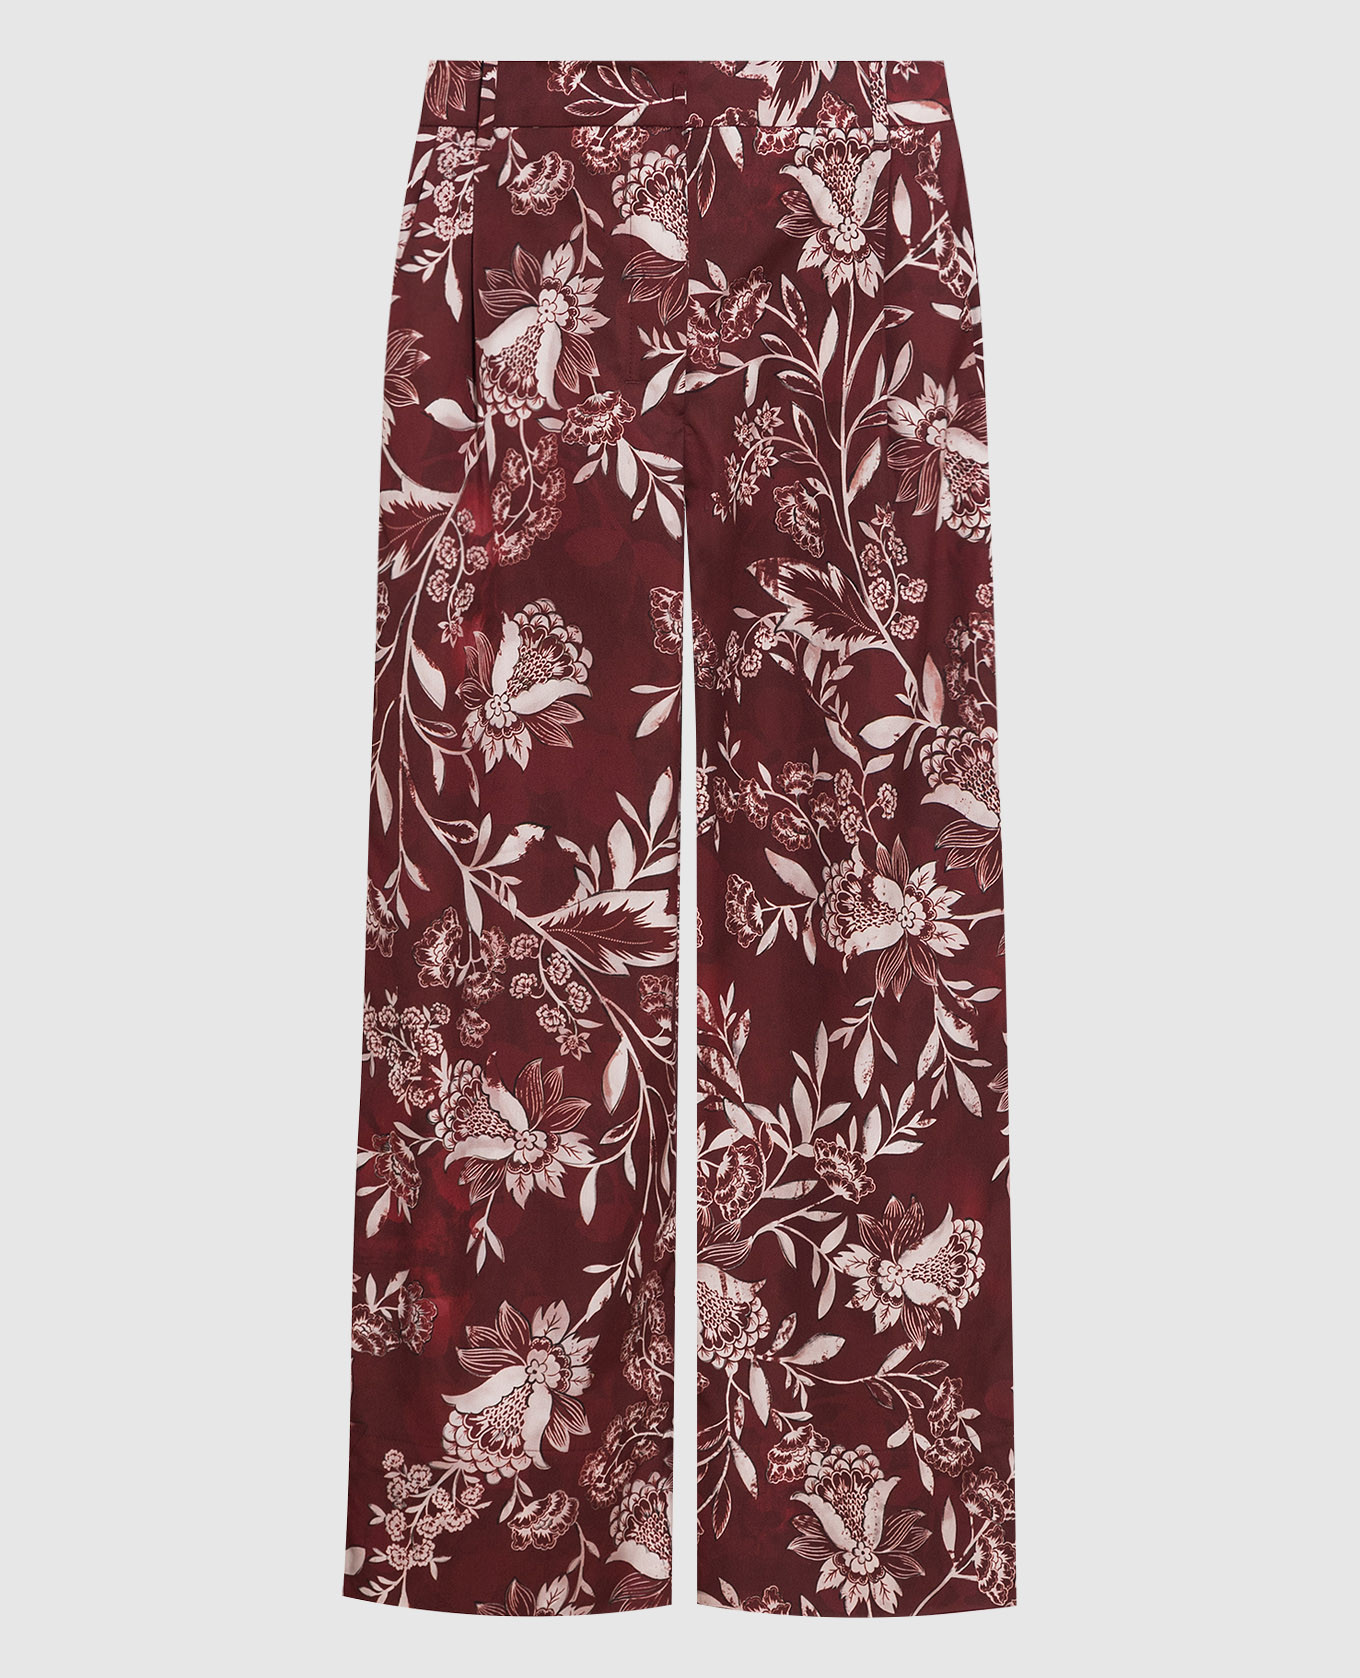 Teresa burgundy culottes in a floral print